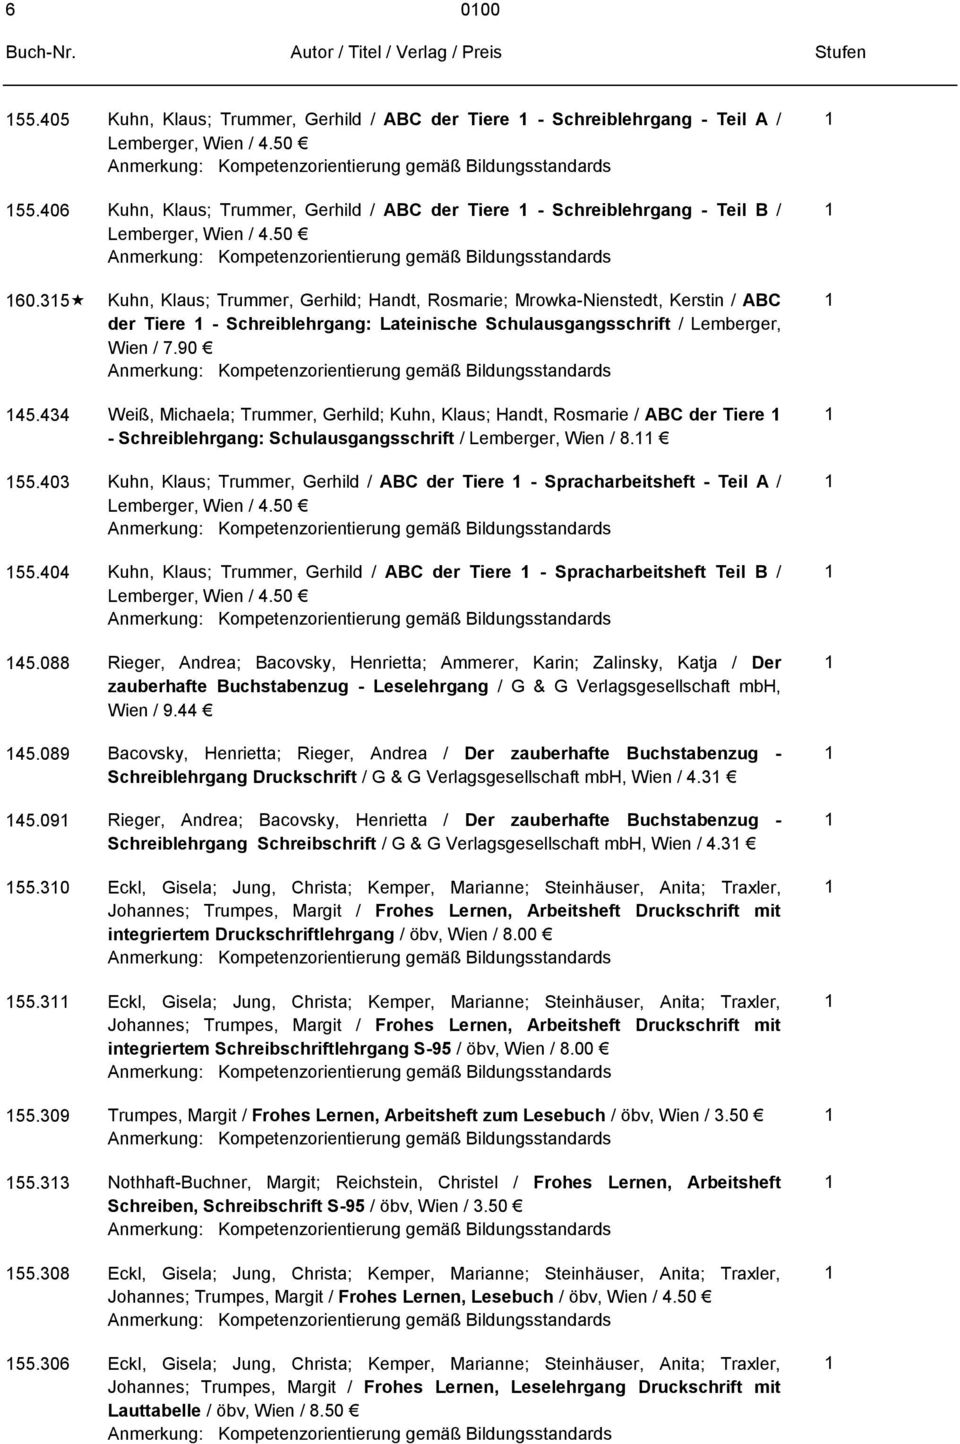 5 Kuhn, Klaus; Trummer, Gerhild; Handt, Rosmarie; Mrowka-Nienstedt, Kerstin / ABC der Tiere - Schreiblehrgang: Lateinische Schulausgangsschrift / Lemberger, Wien / 7.90 5.